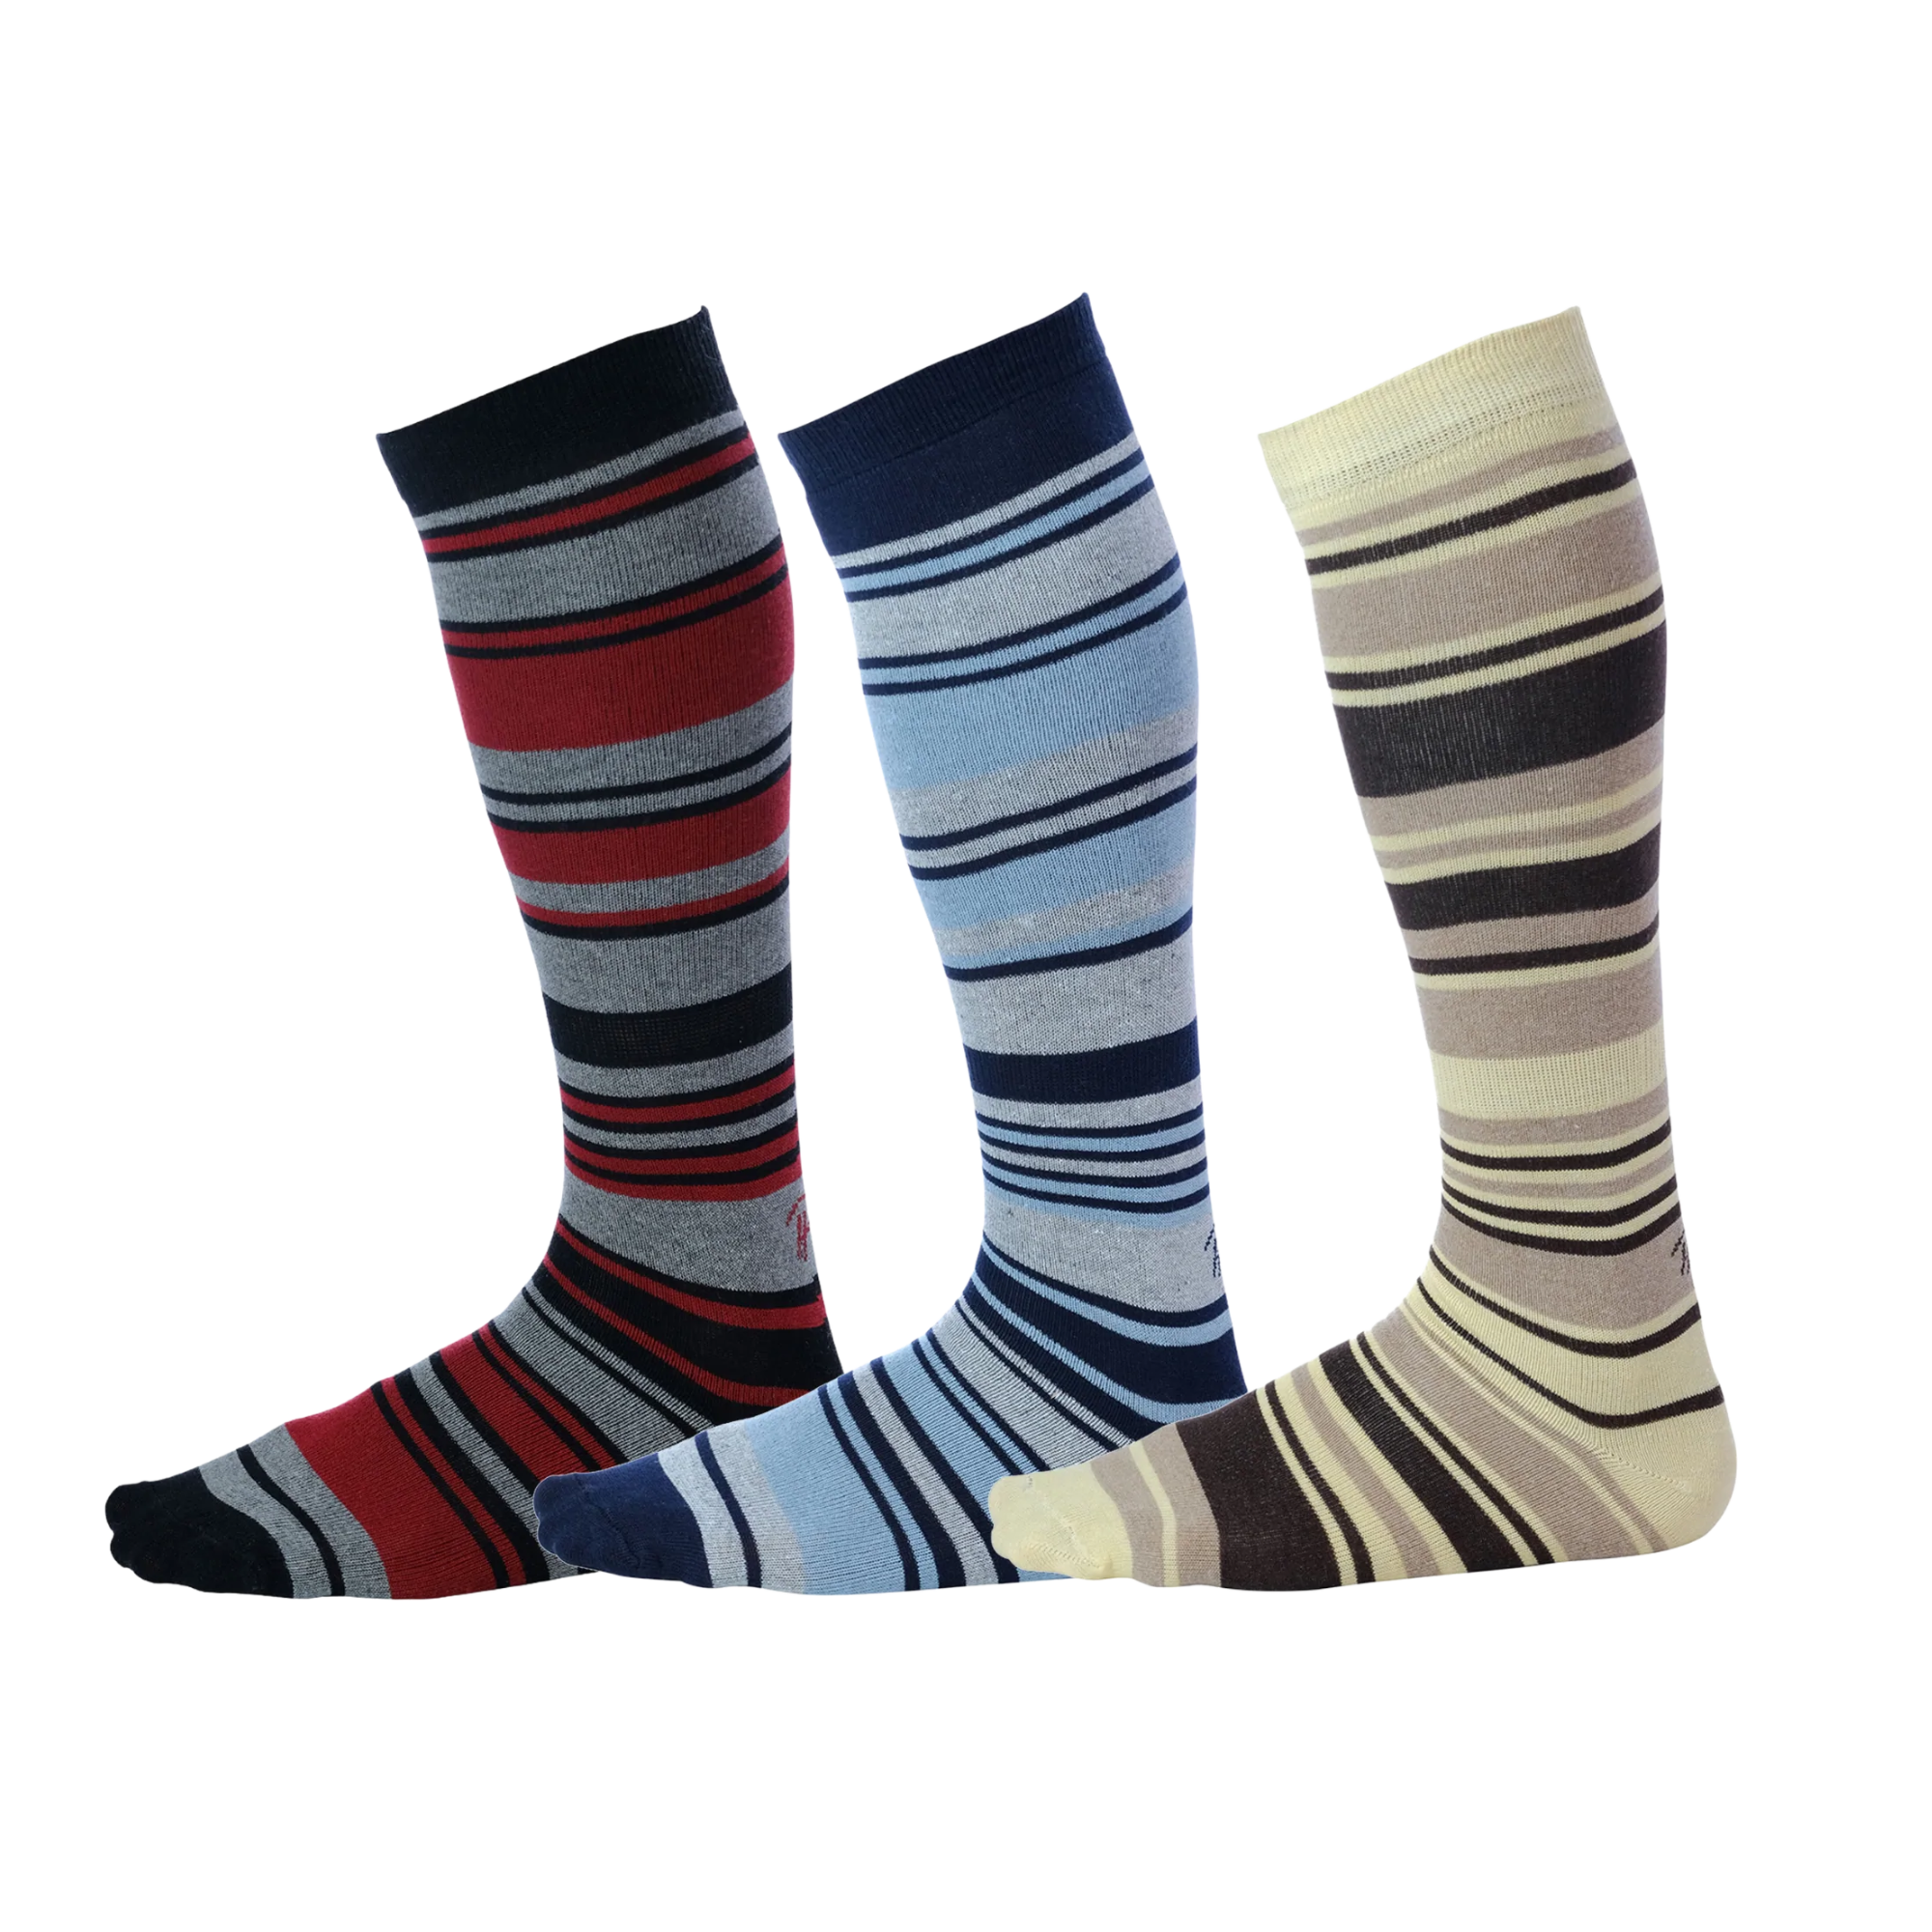 red grey and black striped dress socks, navy light grey and light blue striped dress socks, beige brown and yellow striped dress socks